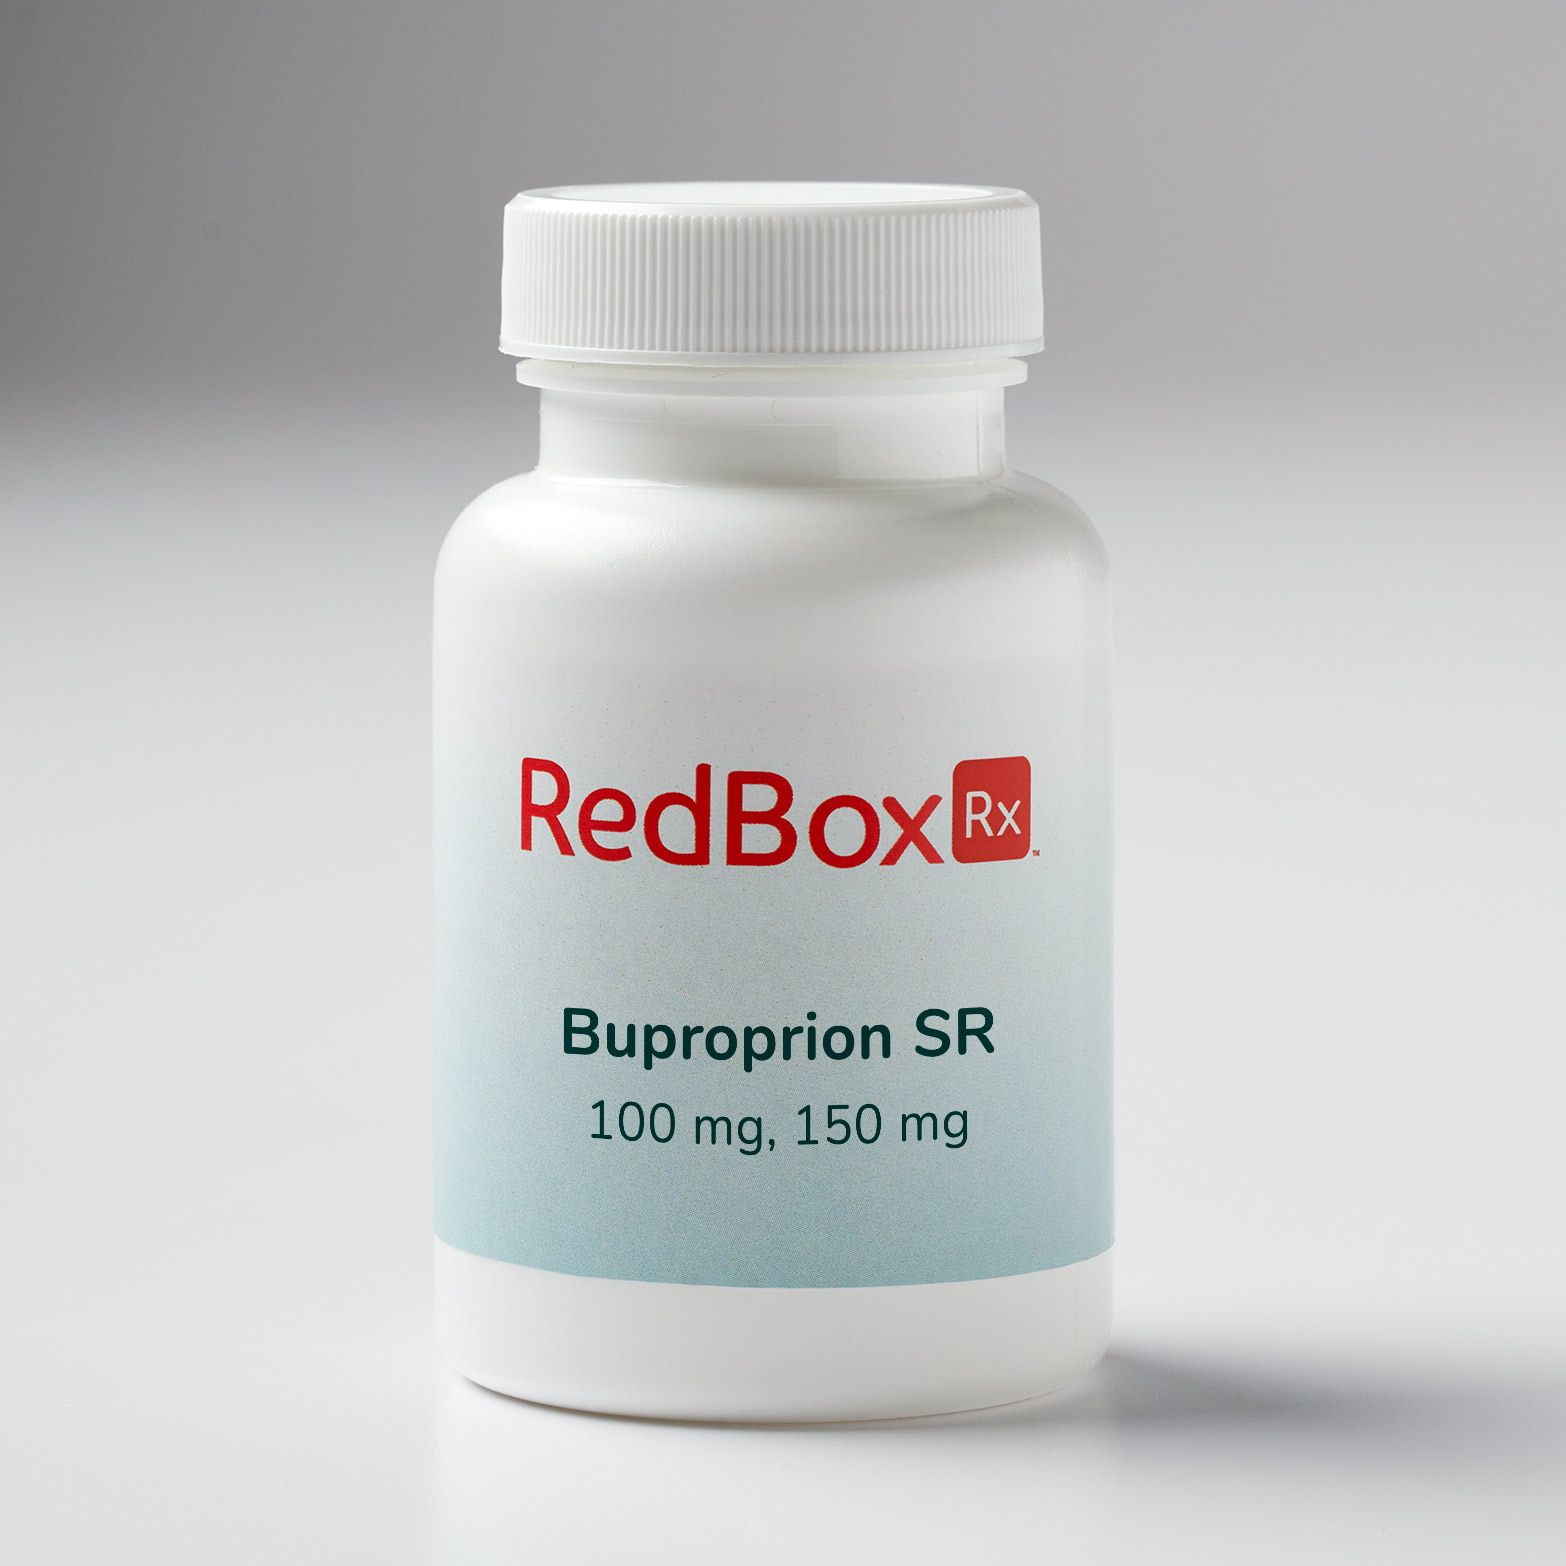 RedBox Rx Bupropion SR Medication Bottle